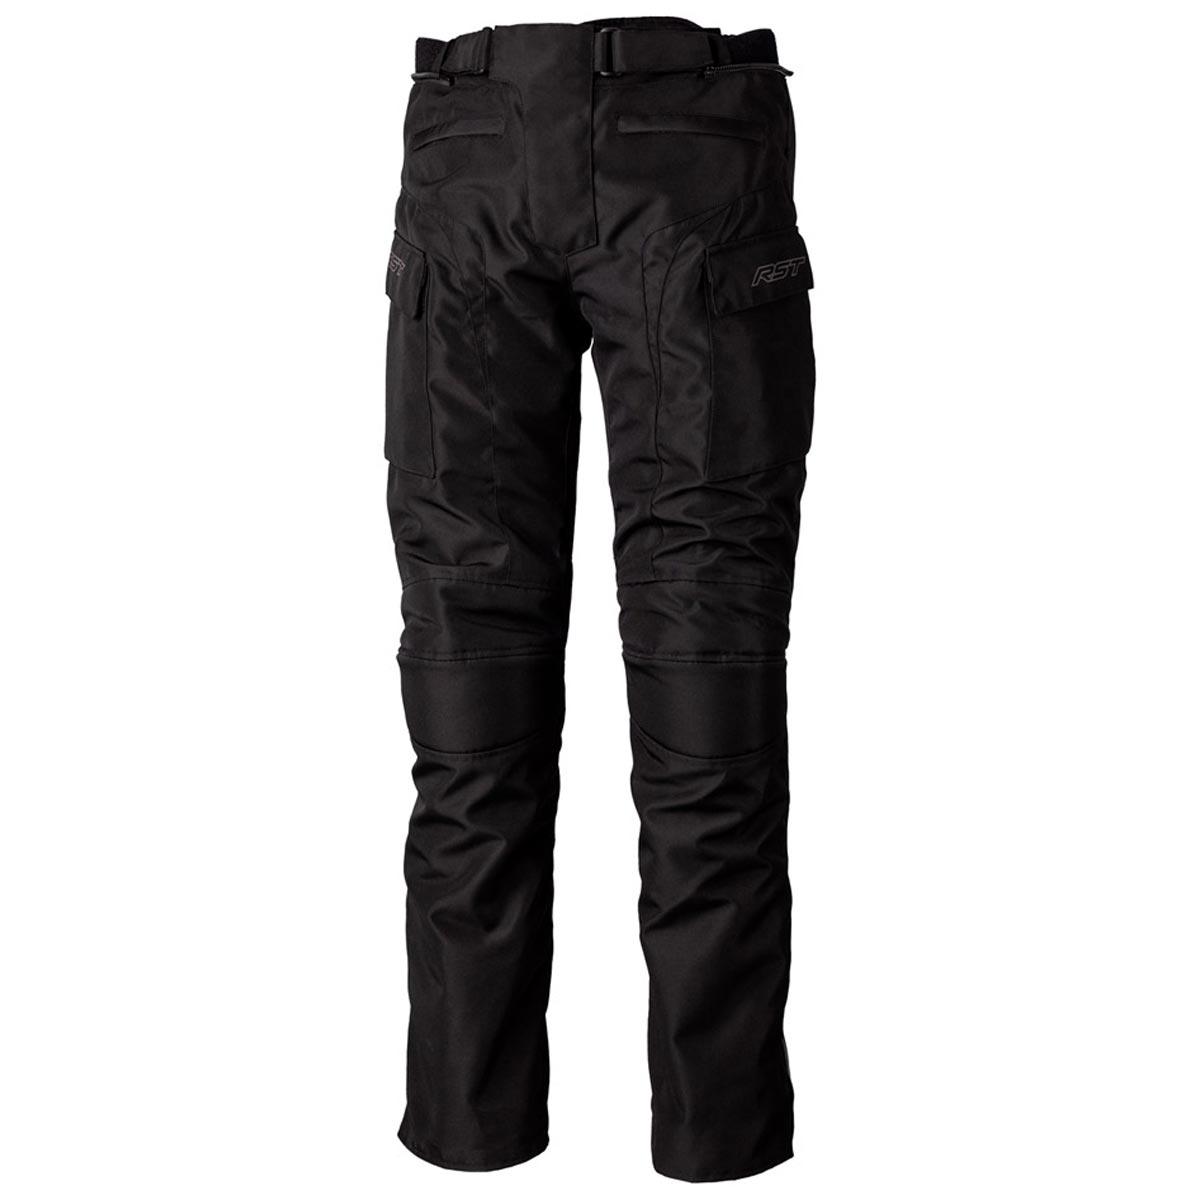 Buffalo Imola Motorcycle Trousers Waterproof Textile  PB